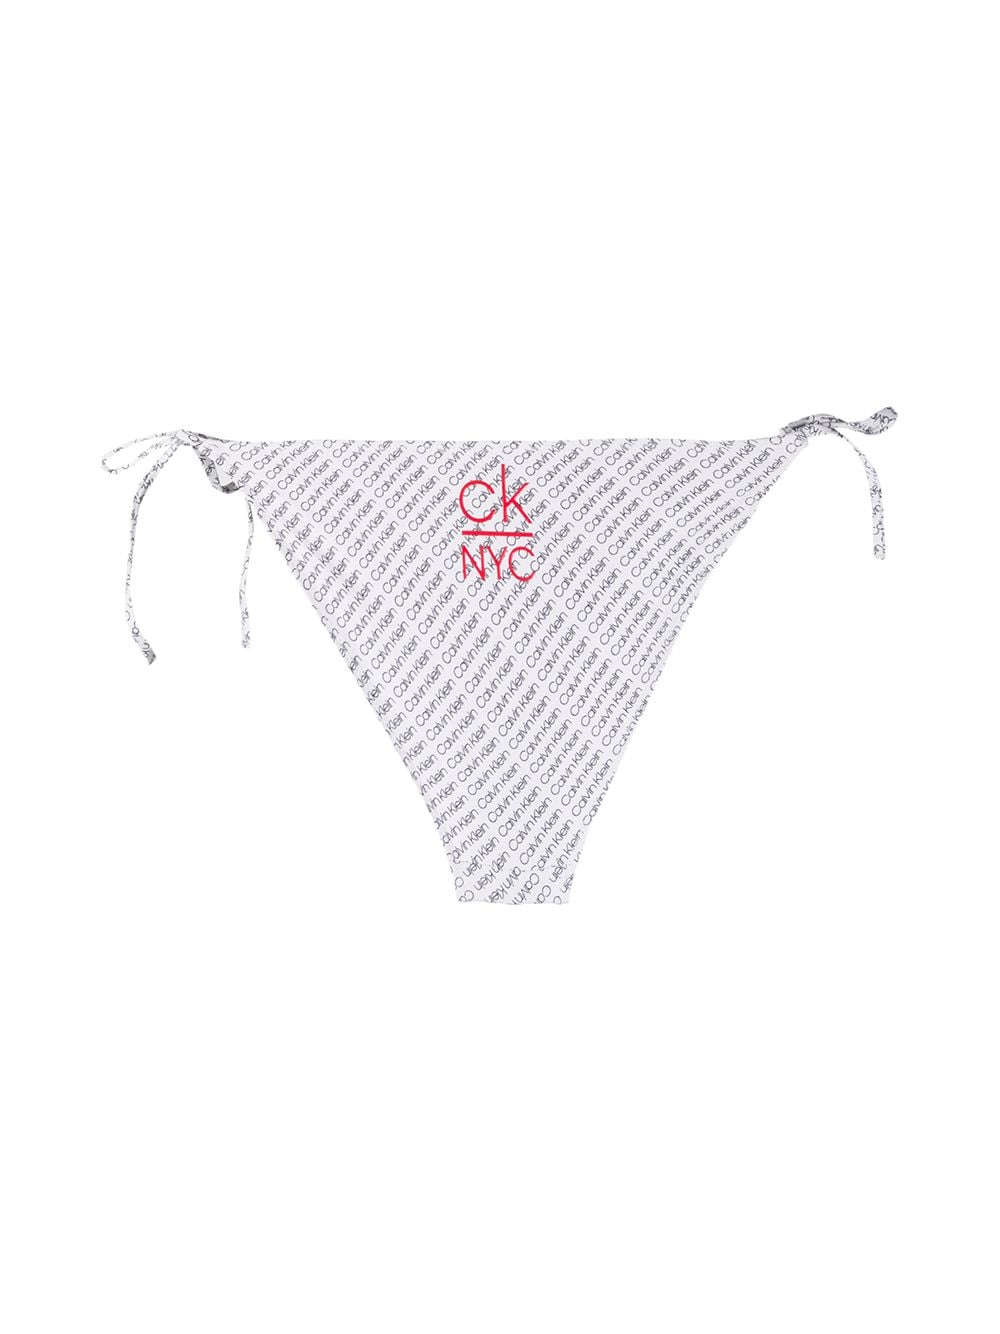 фото Calvin klein плавки бикини с логотипом